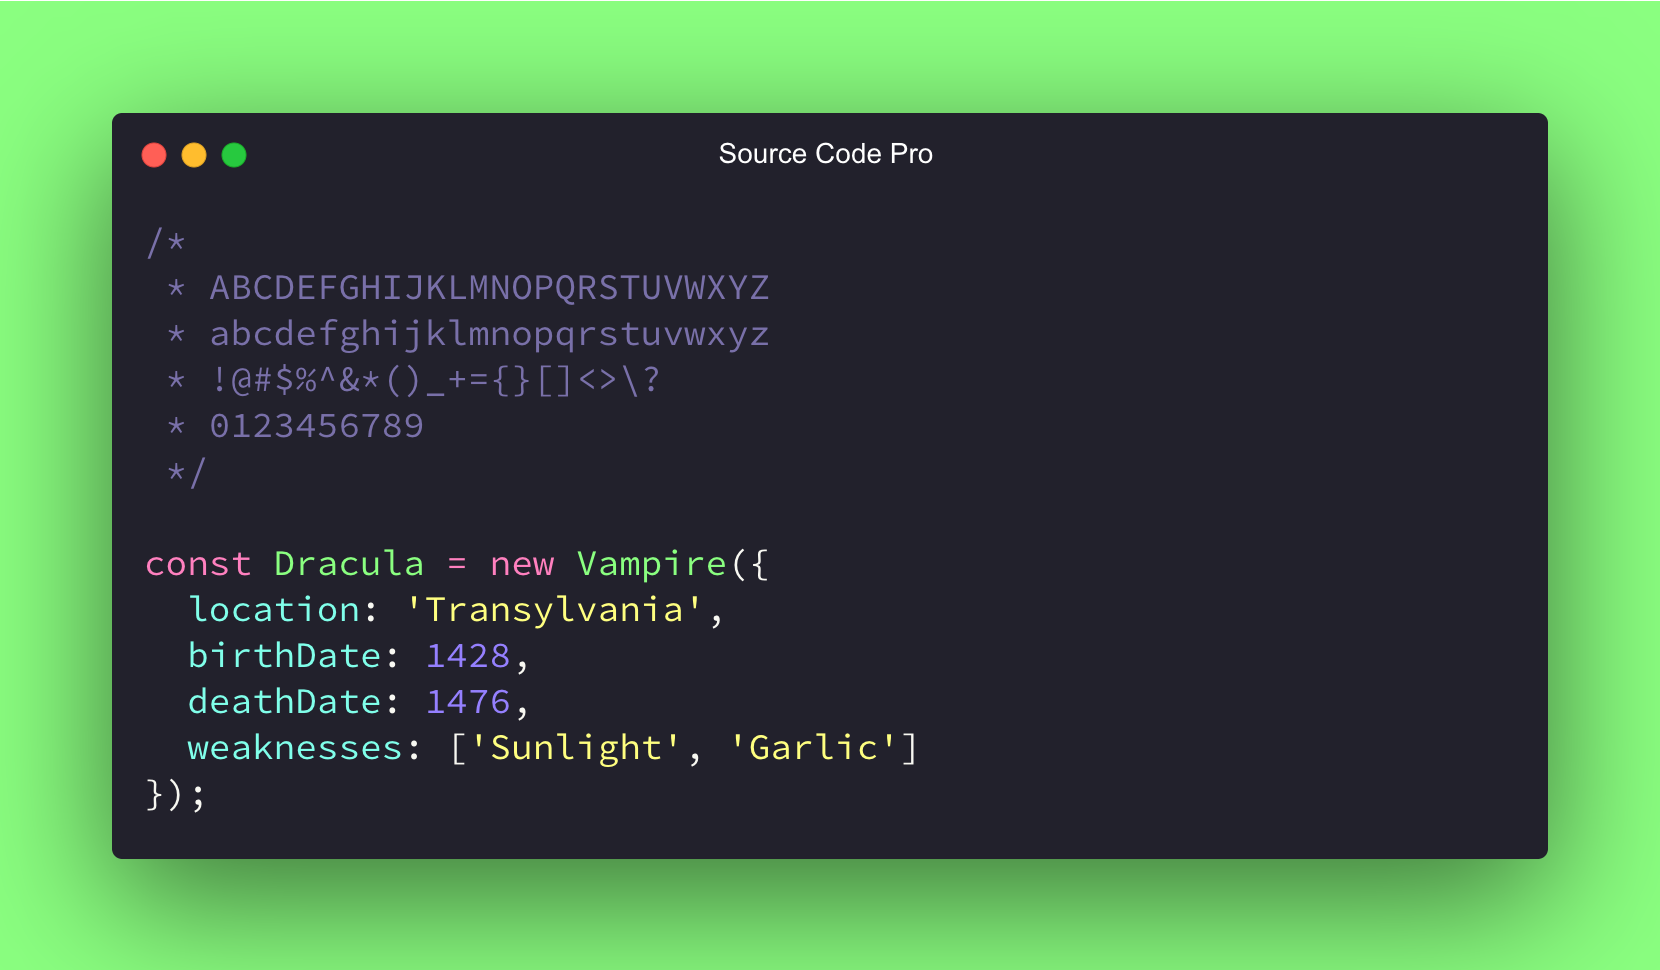 Source Code Pro